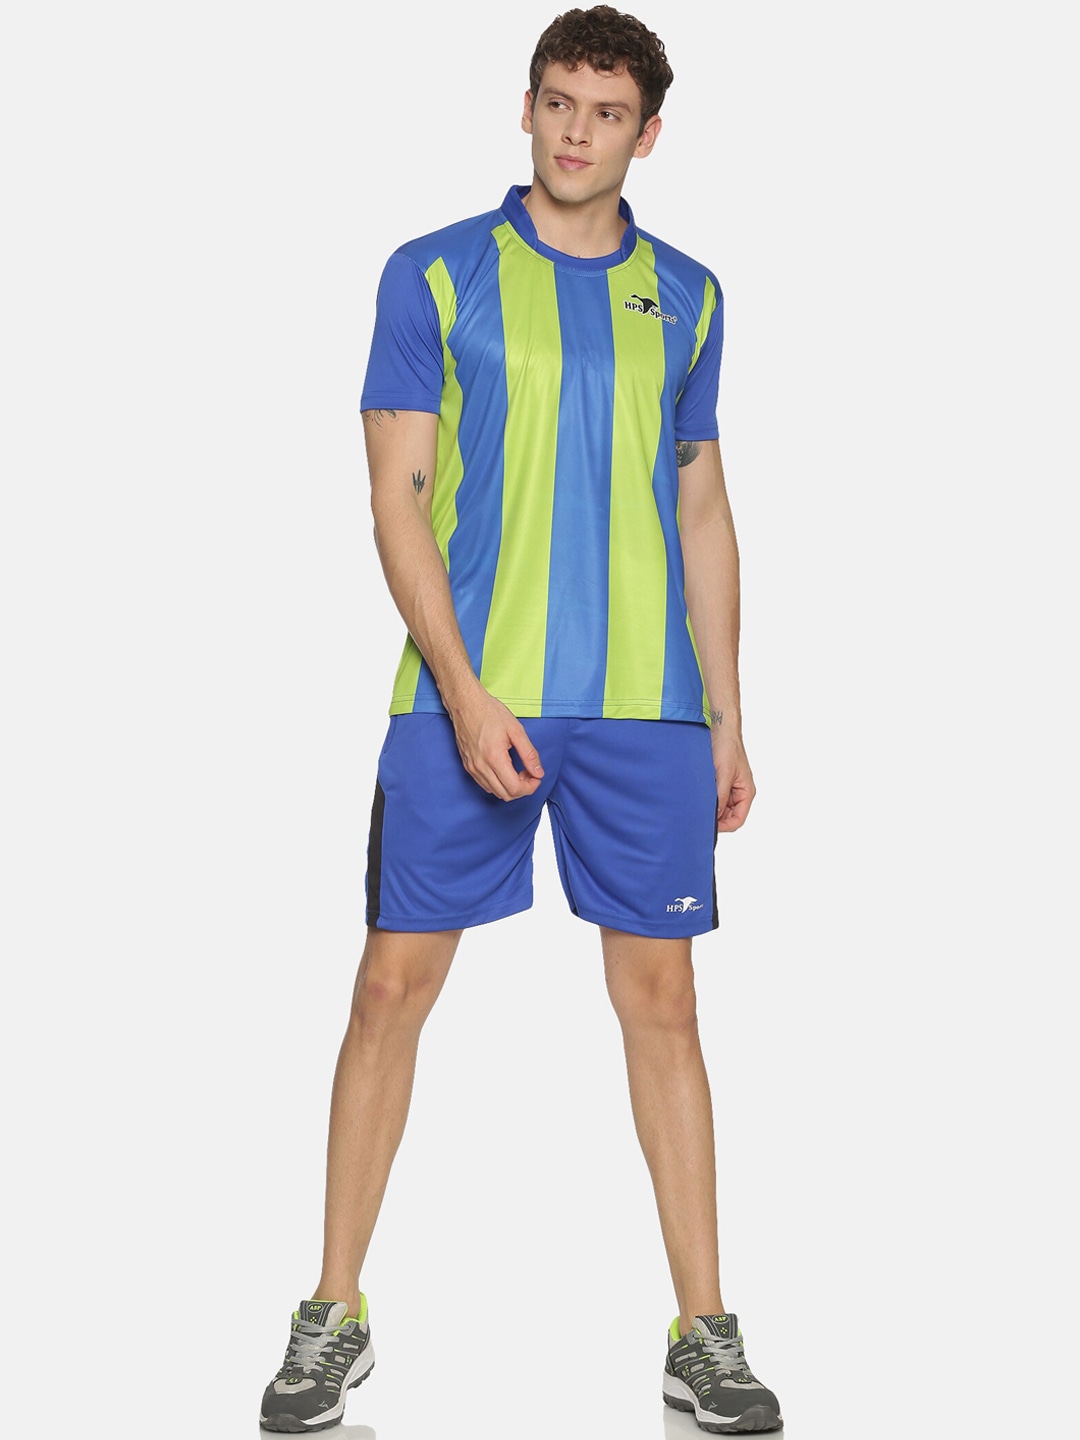 Clothing Tracksuits | HPS Sports Men Blue & Green Striped Football Kit - BT91067